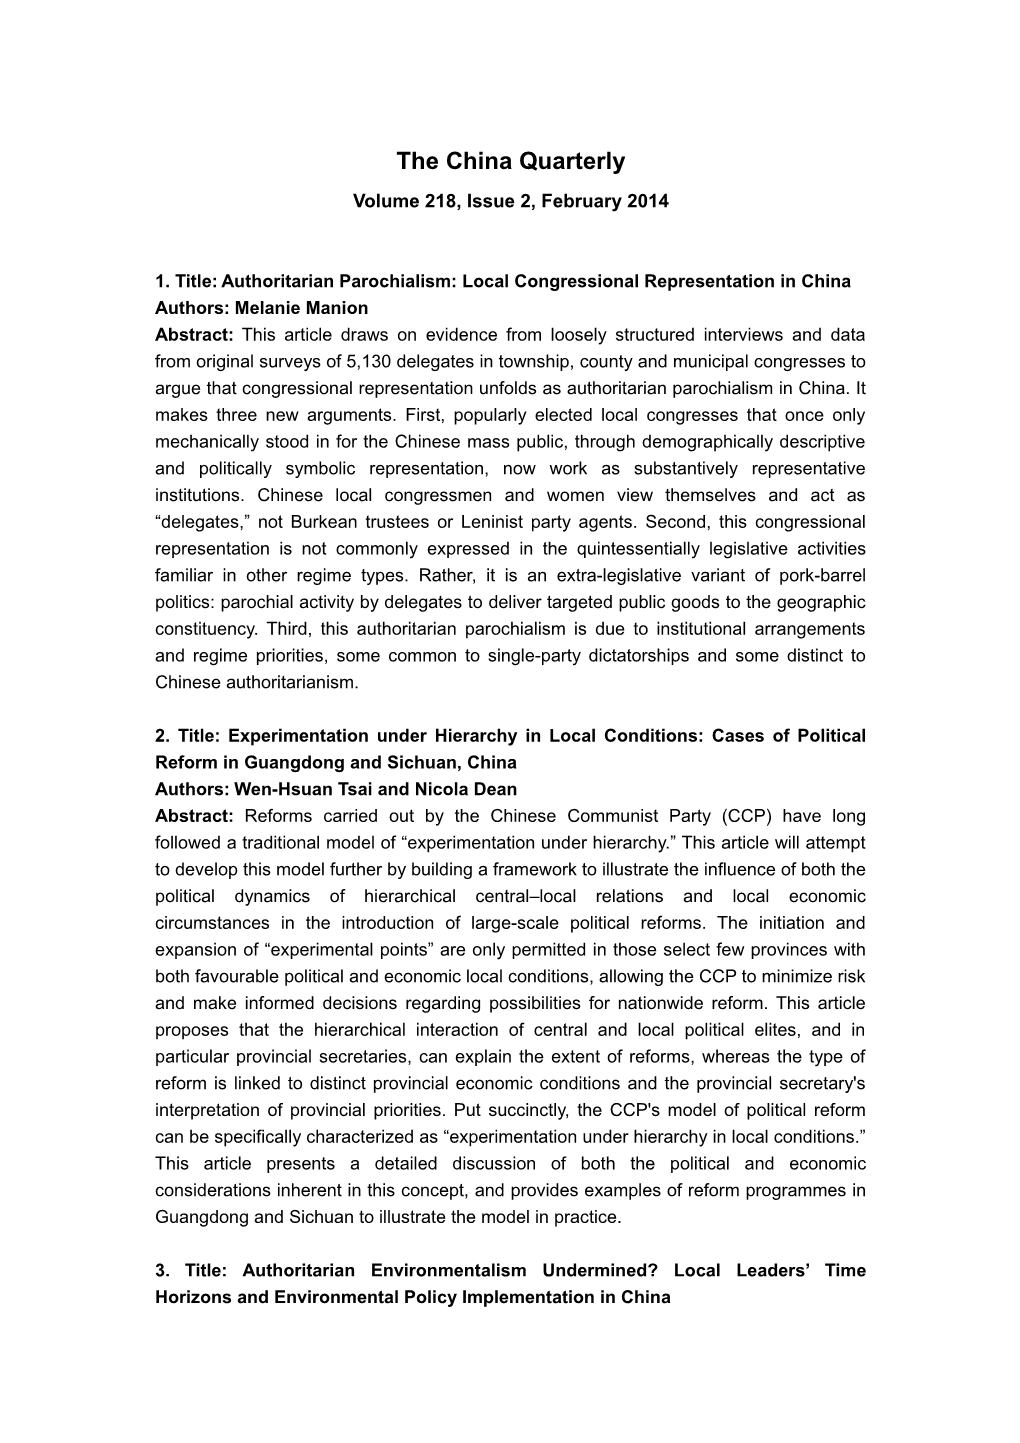 1. Title:Authoritarian Parochialism: Local Congressional Representation in China